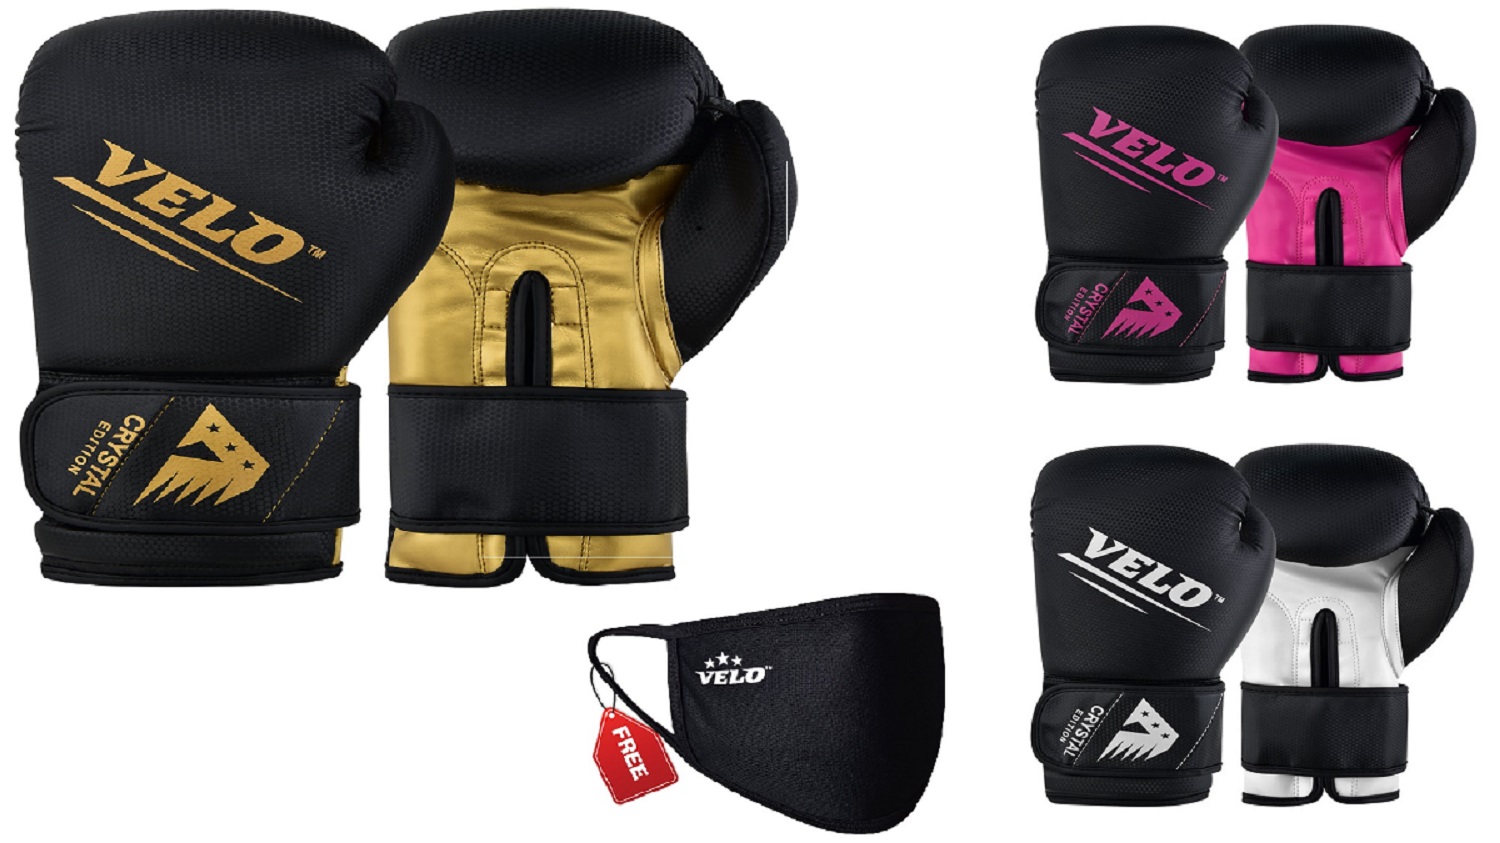 VELO Boxing Gloves Crystal Leather Muay Thai Training Sparring Punching Bag Mitt 